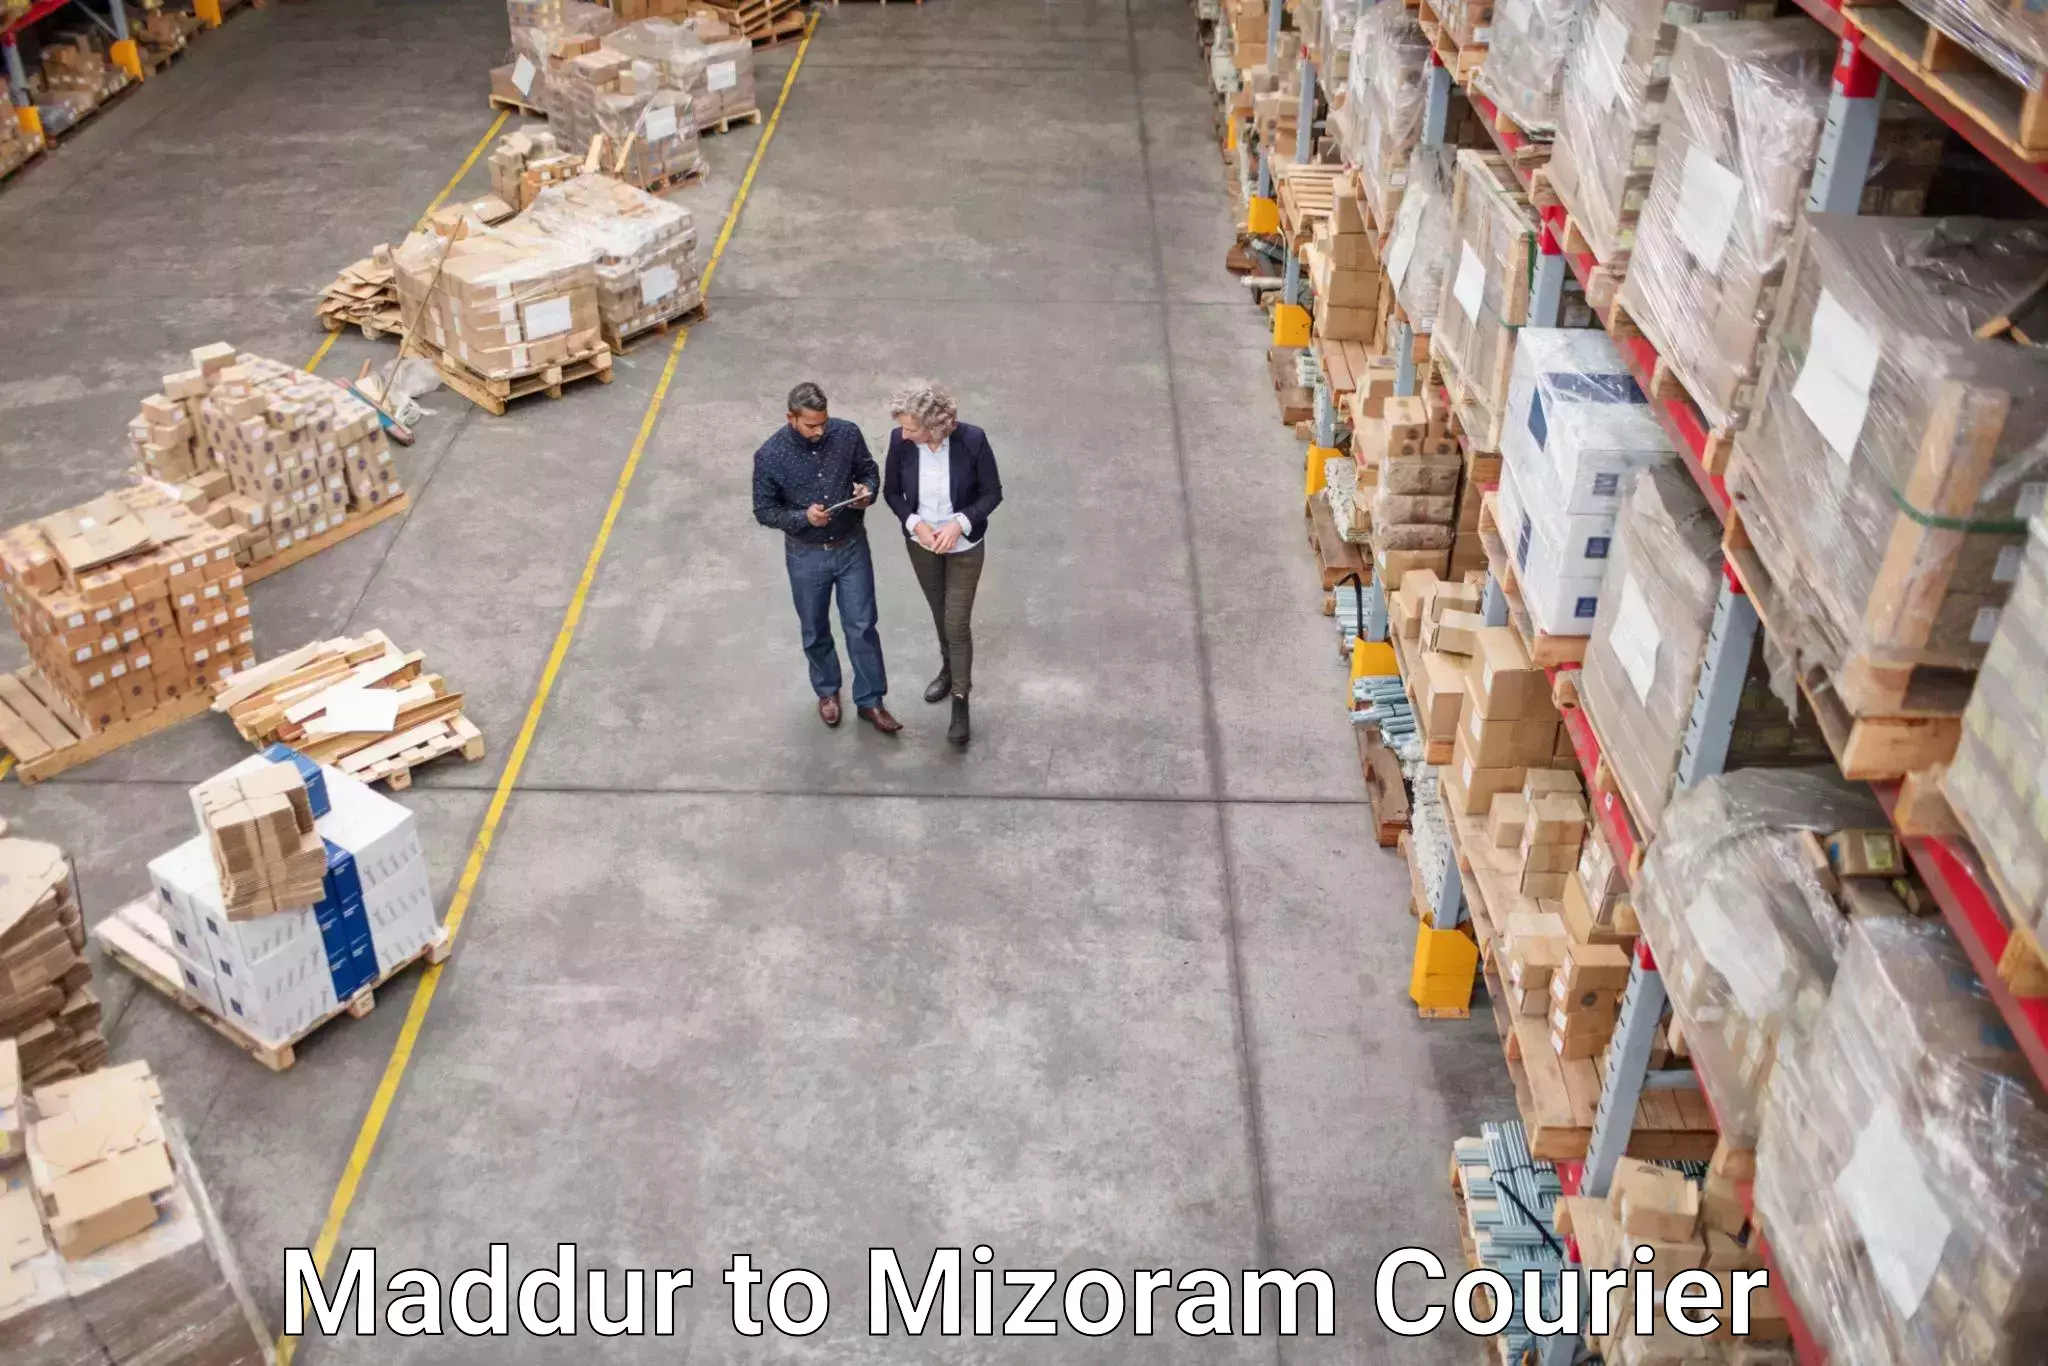 Urban courier service Maddur to Mizoram